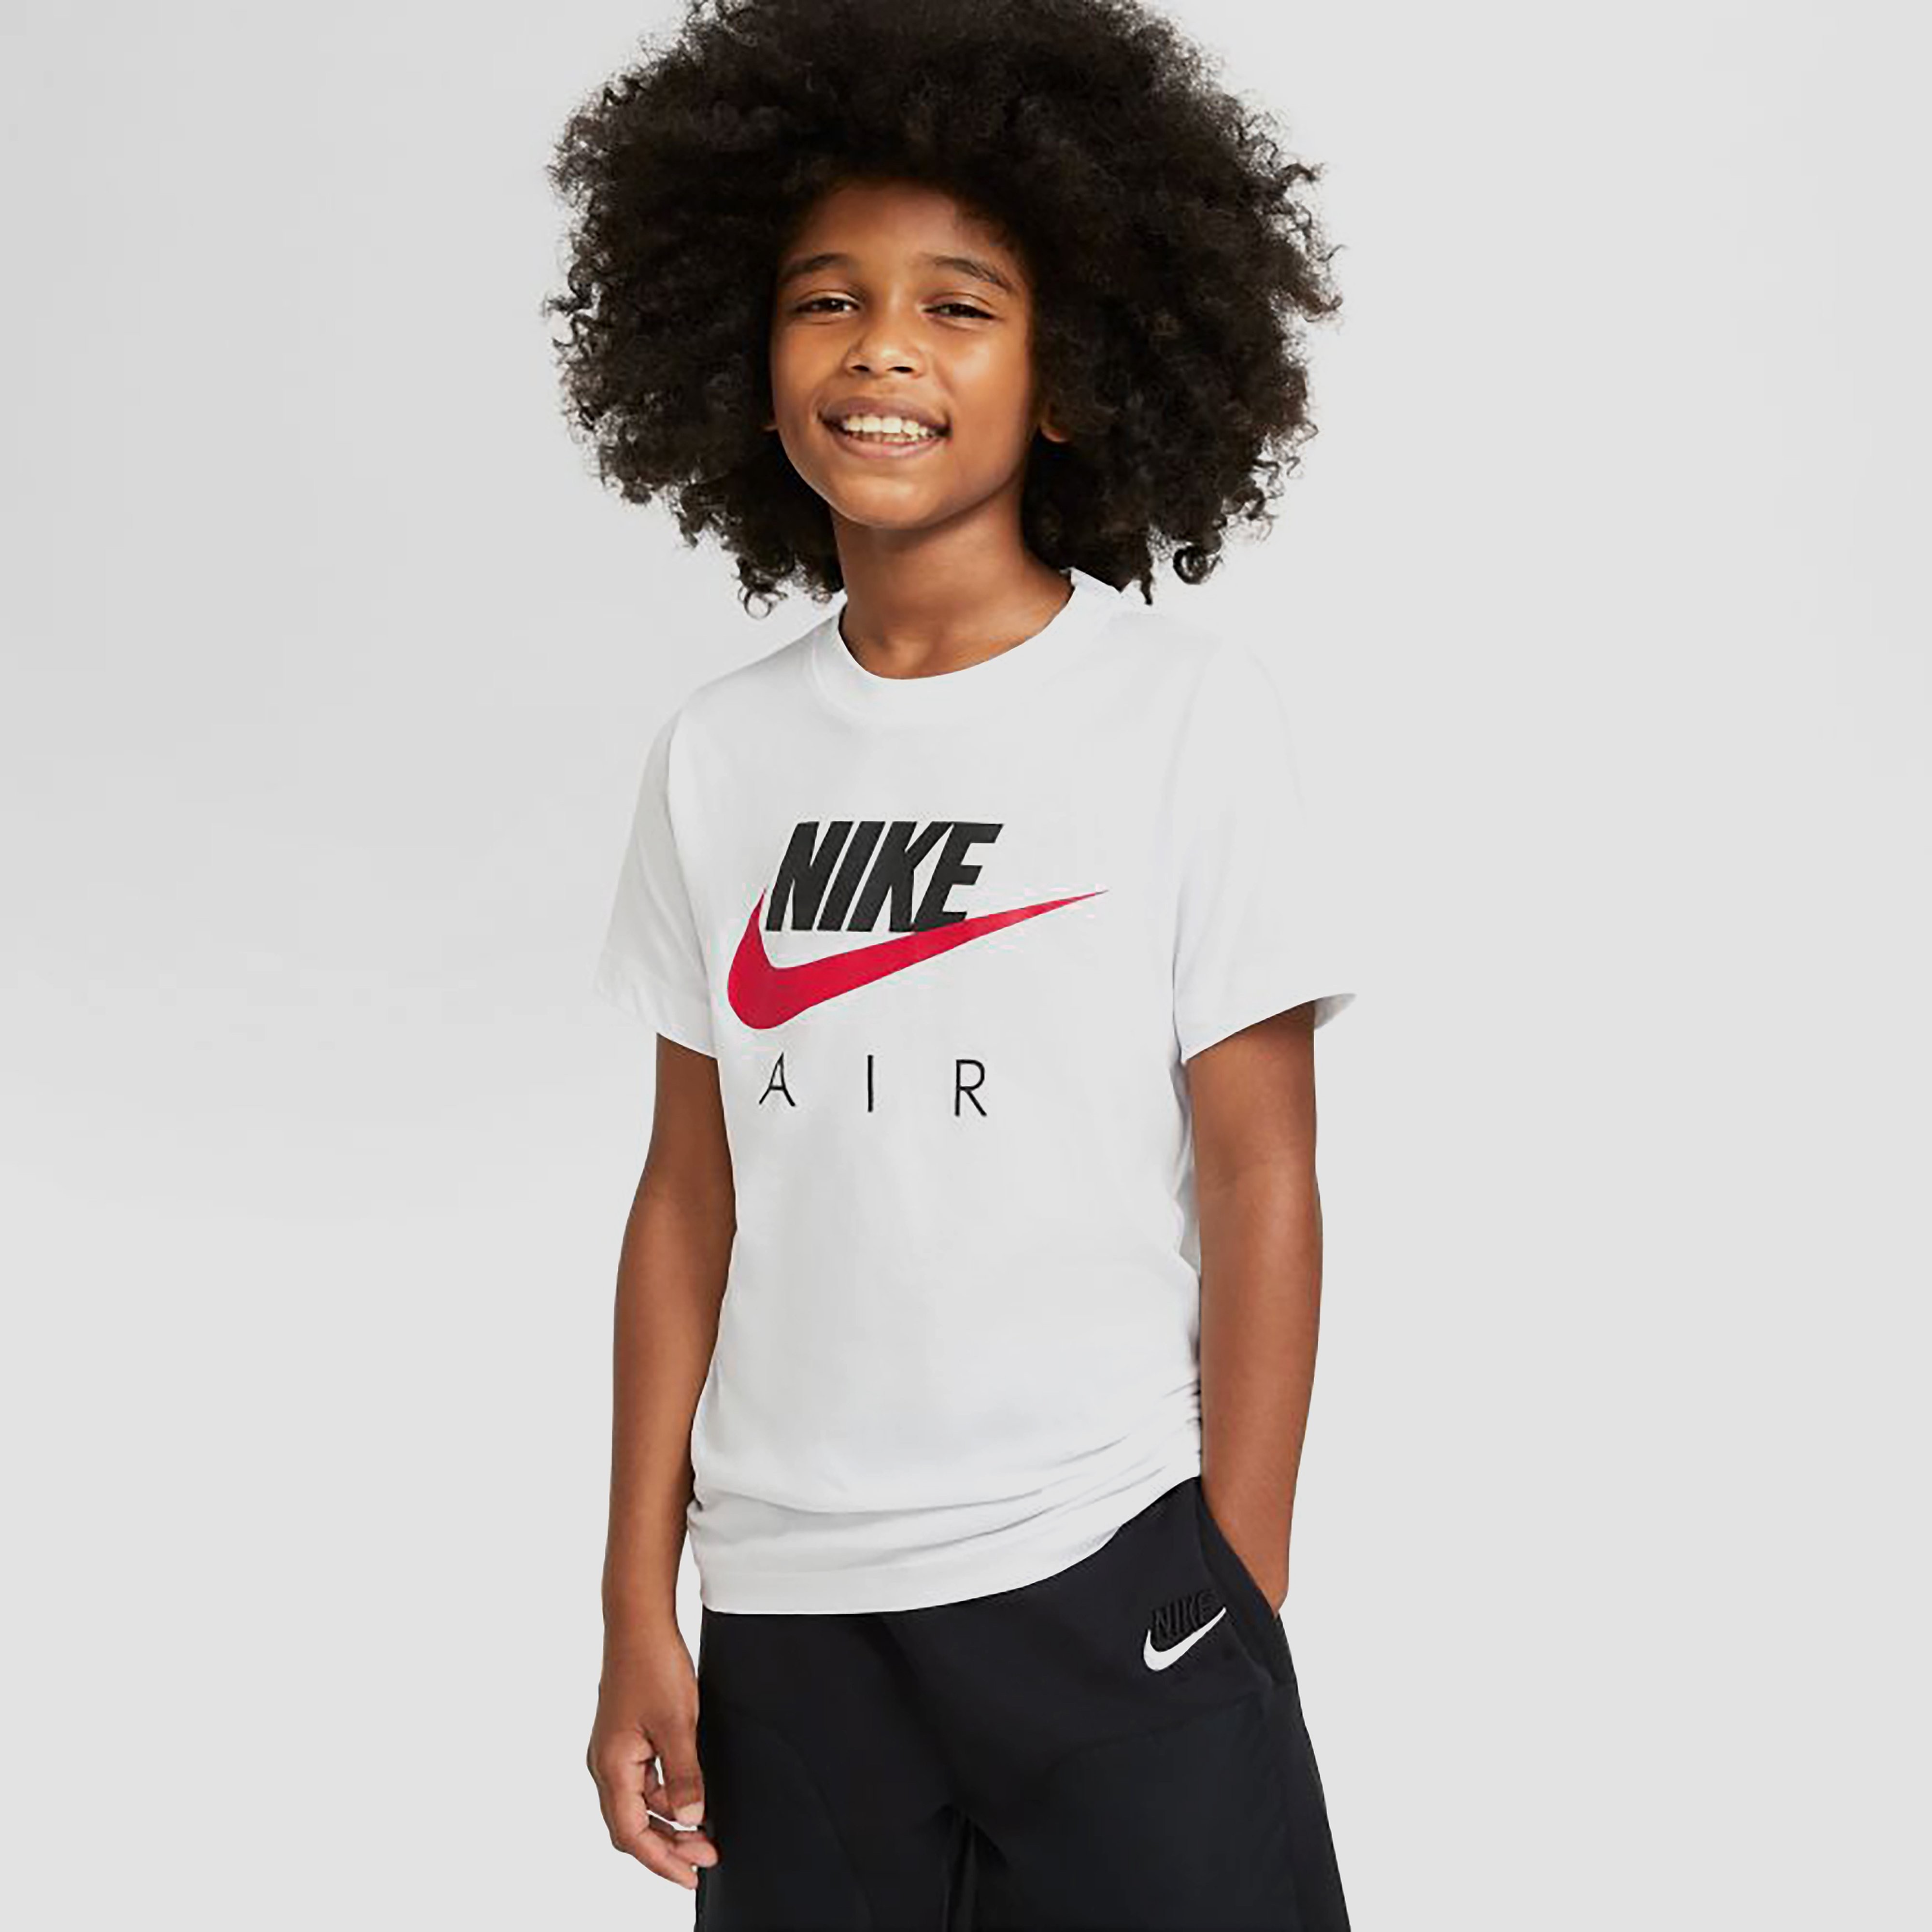 Nike Nike sportswear air shirt wit/rood kinderen kinderen